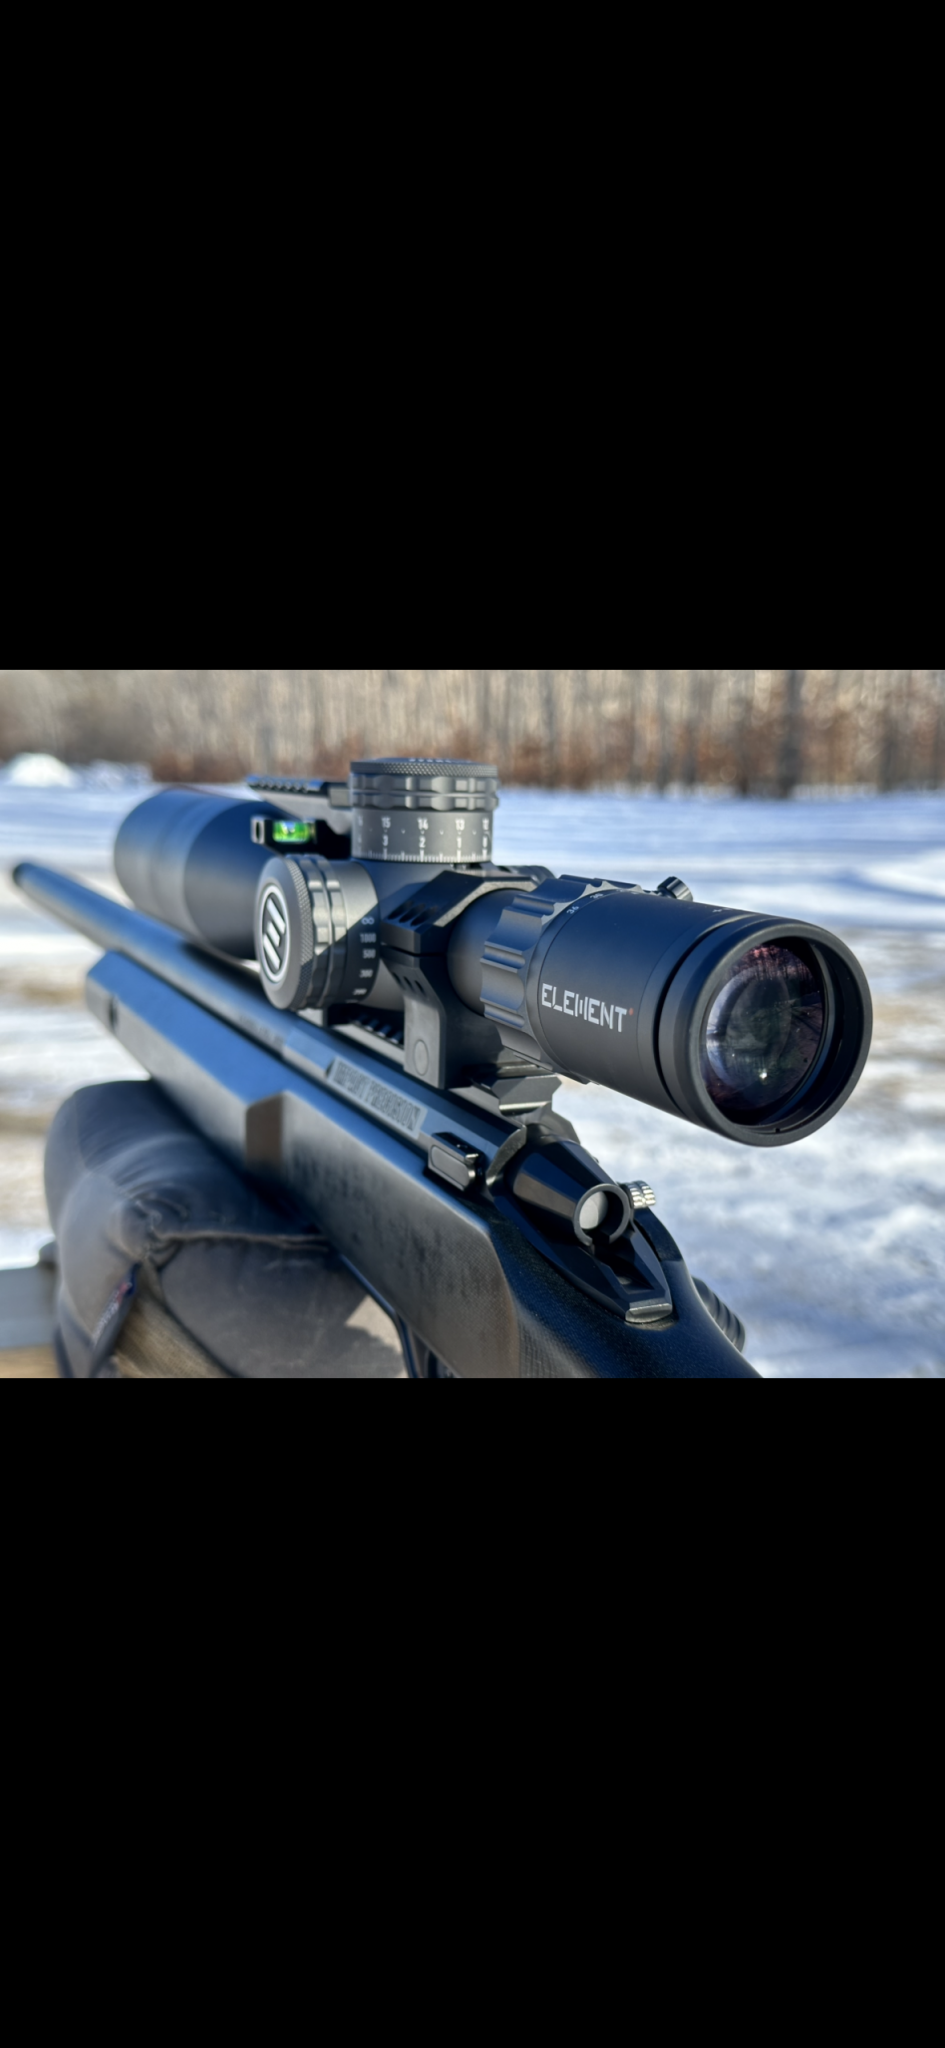 Element Optics Theos 6-36x56 riflescope, Rifle Scope Reviews